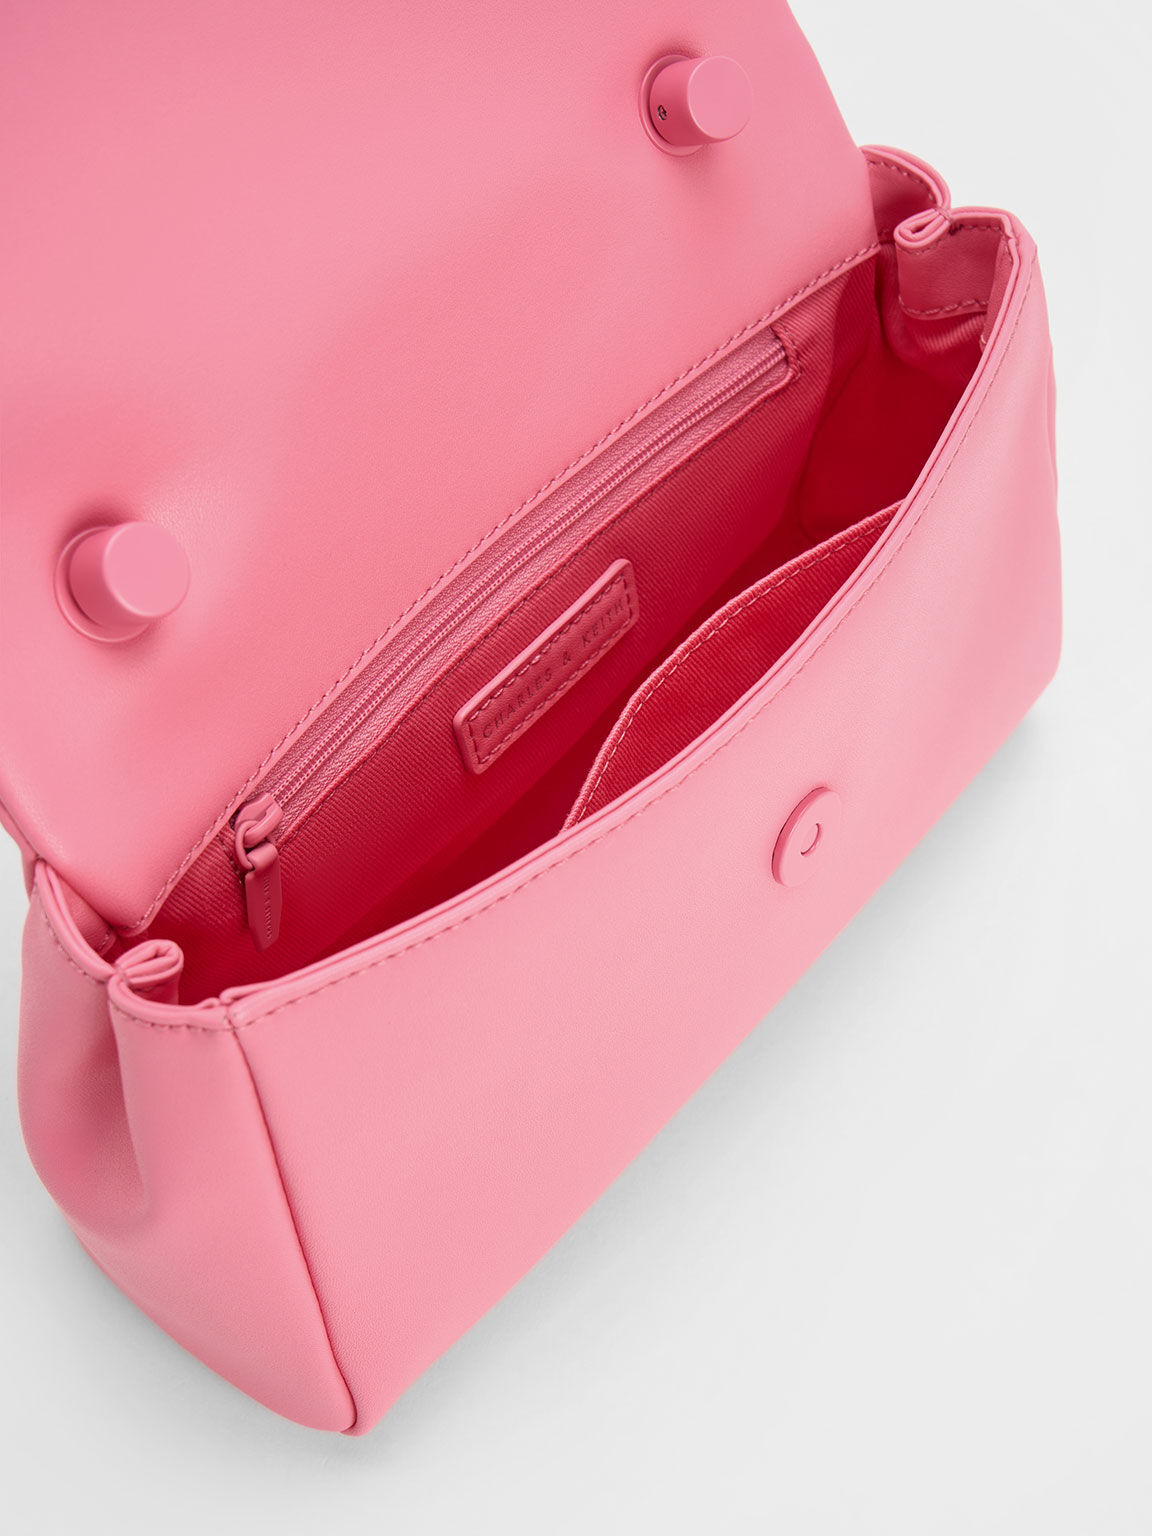 Charles & Keith - Women's Curved Handle Shoulder Bag, Pink, M